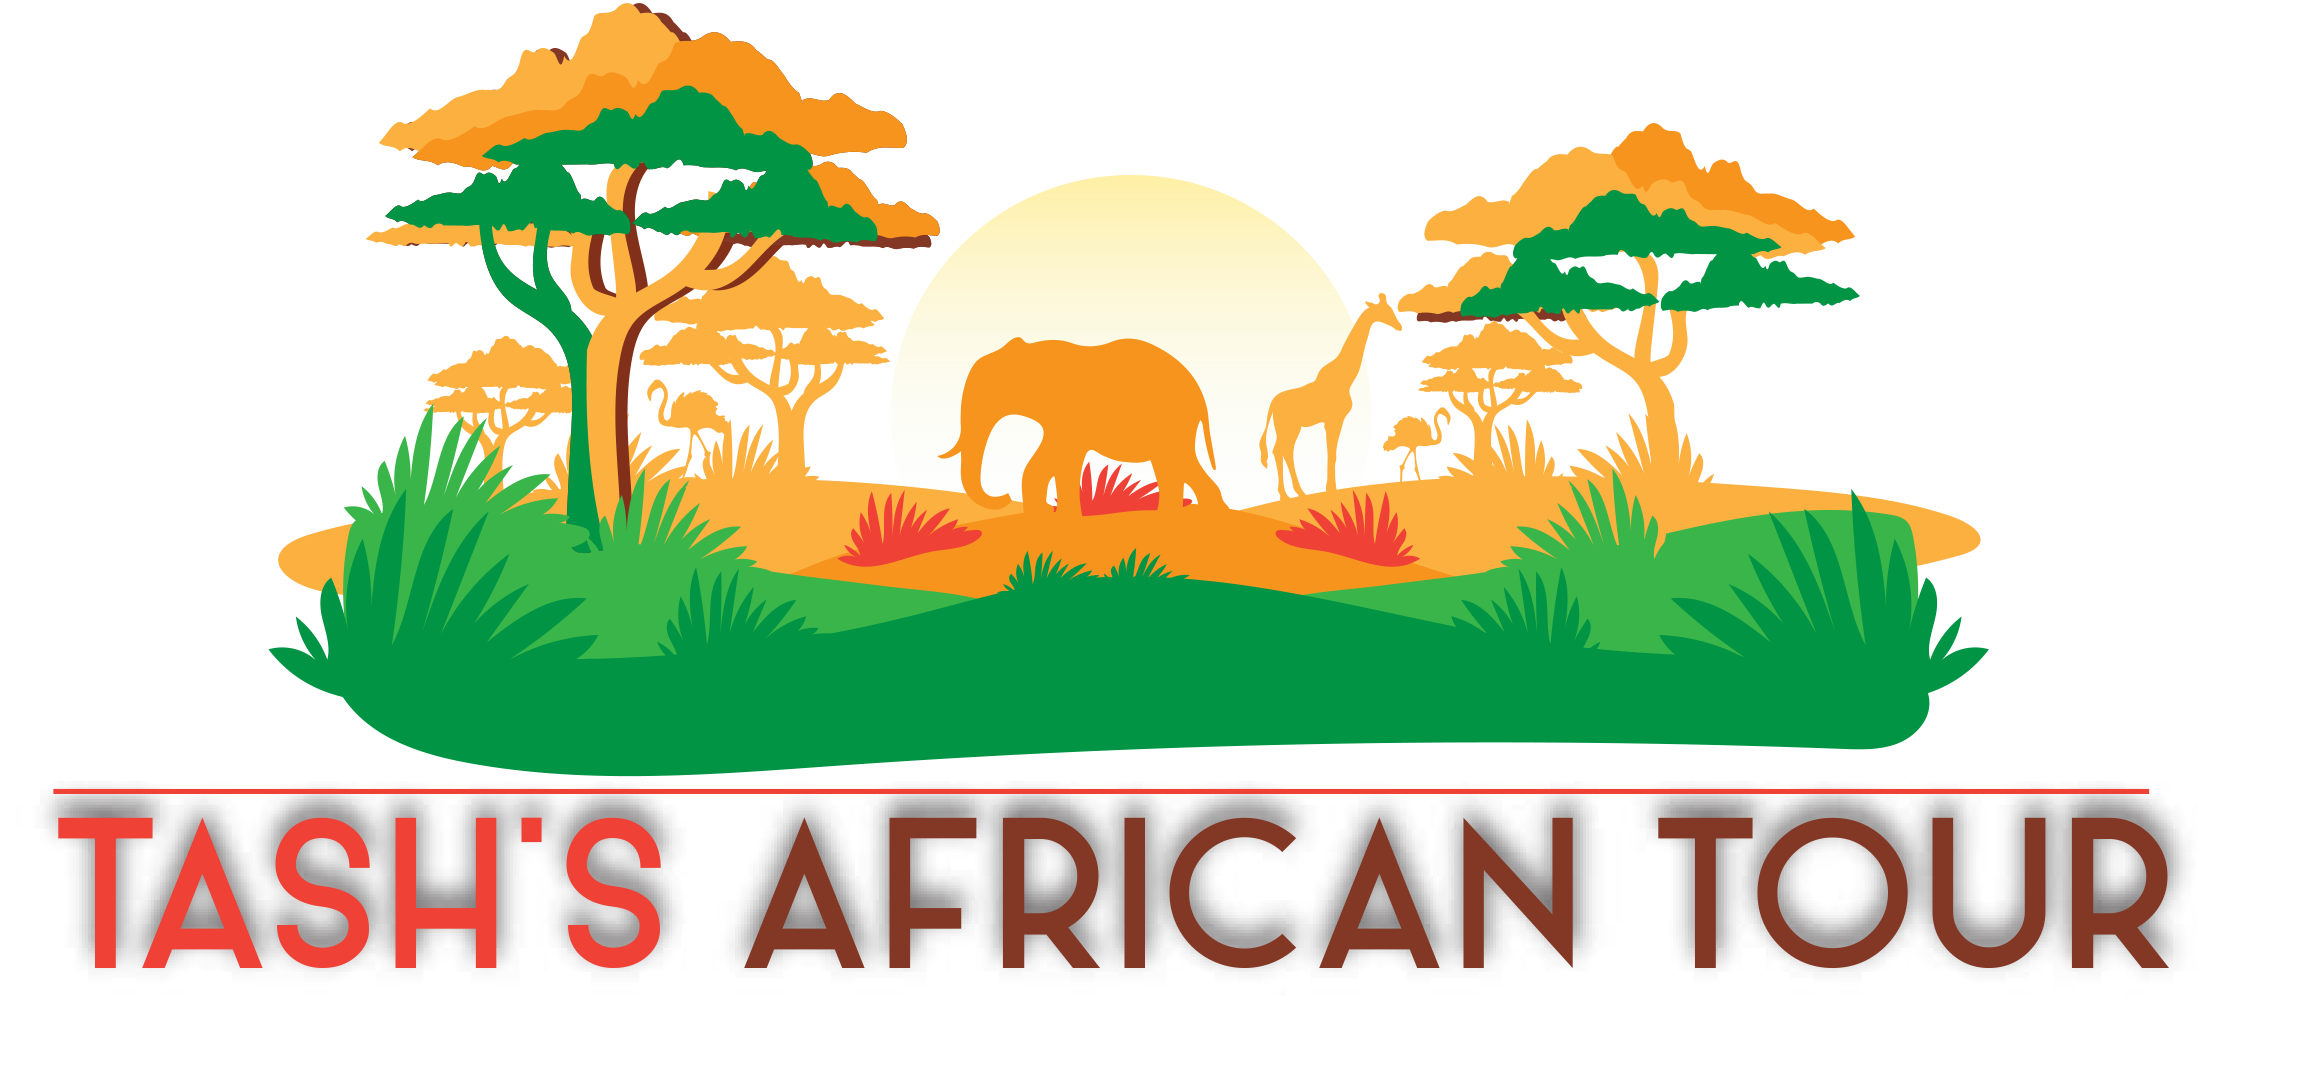 landscape clipart safari african